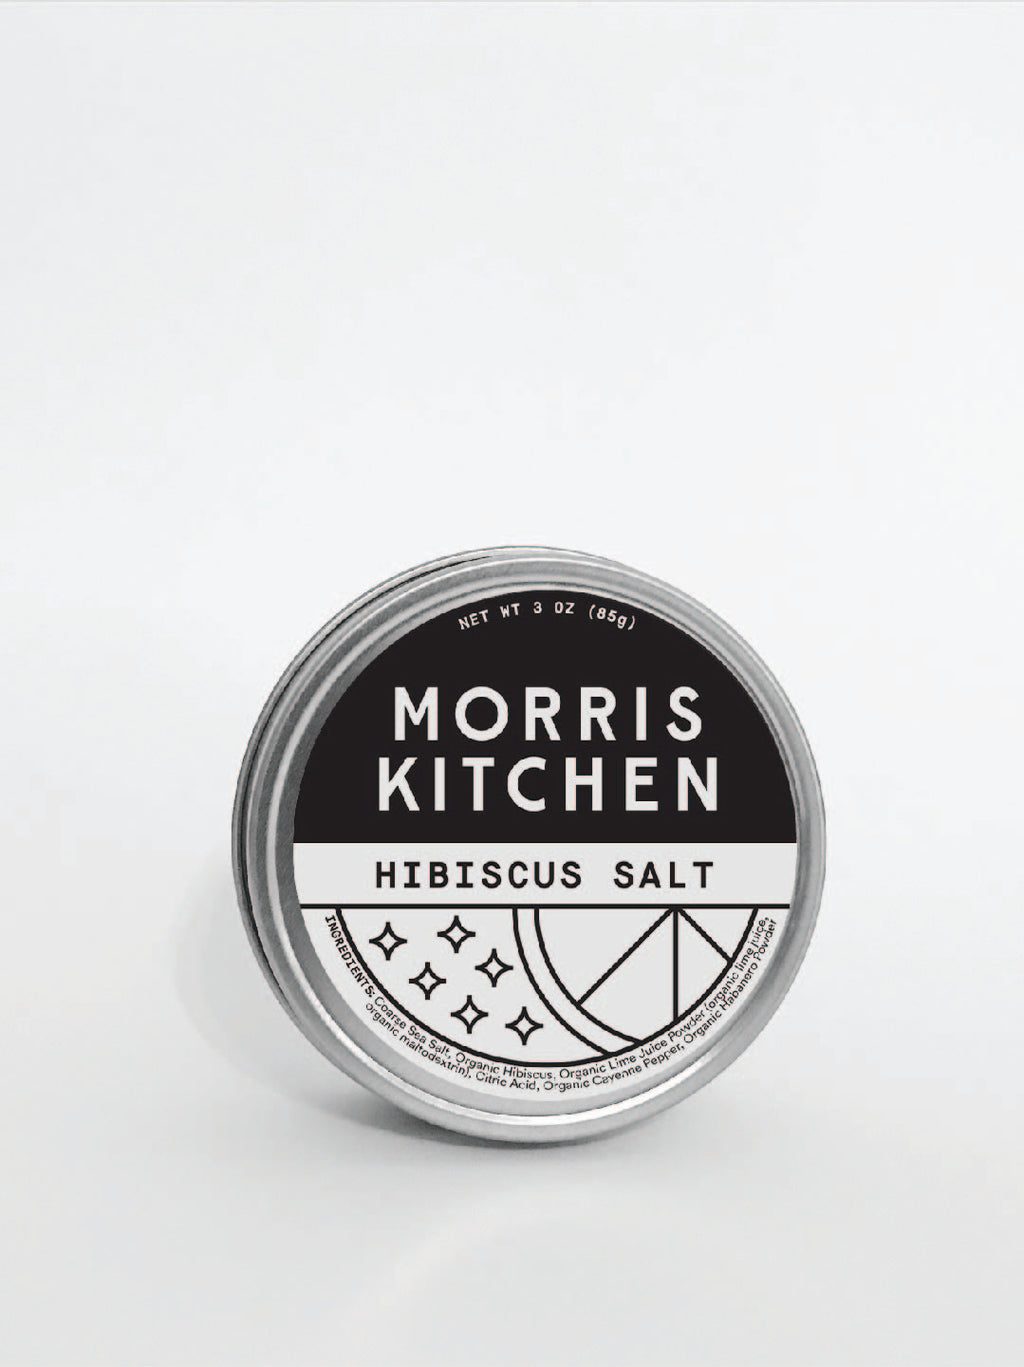 Hibiscus Salt by Morris Kitchen